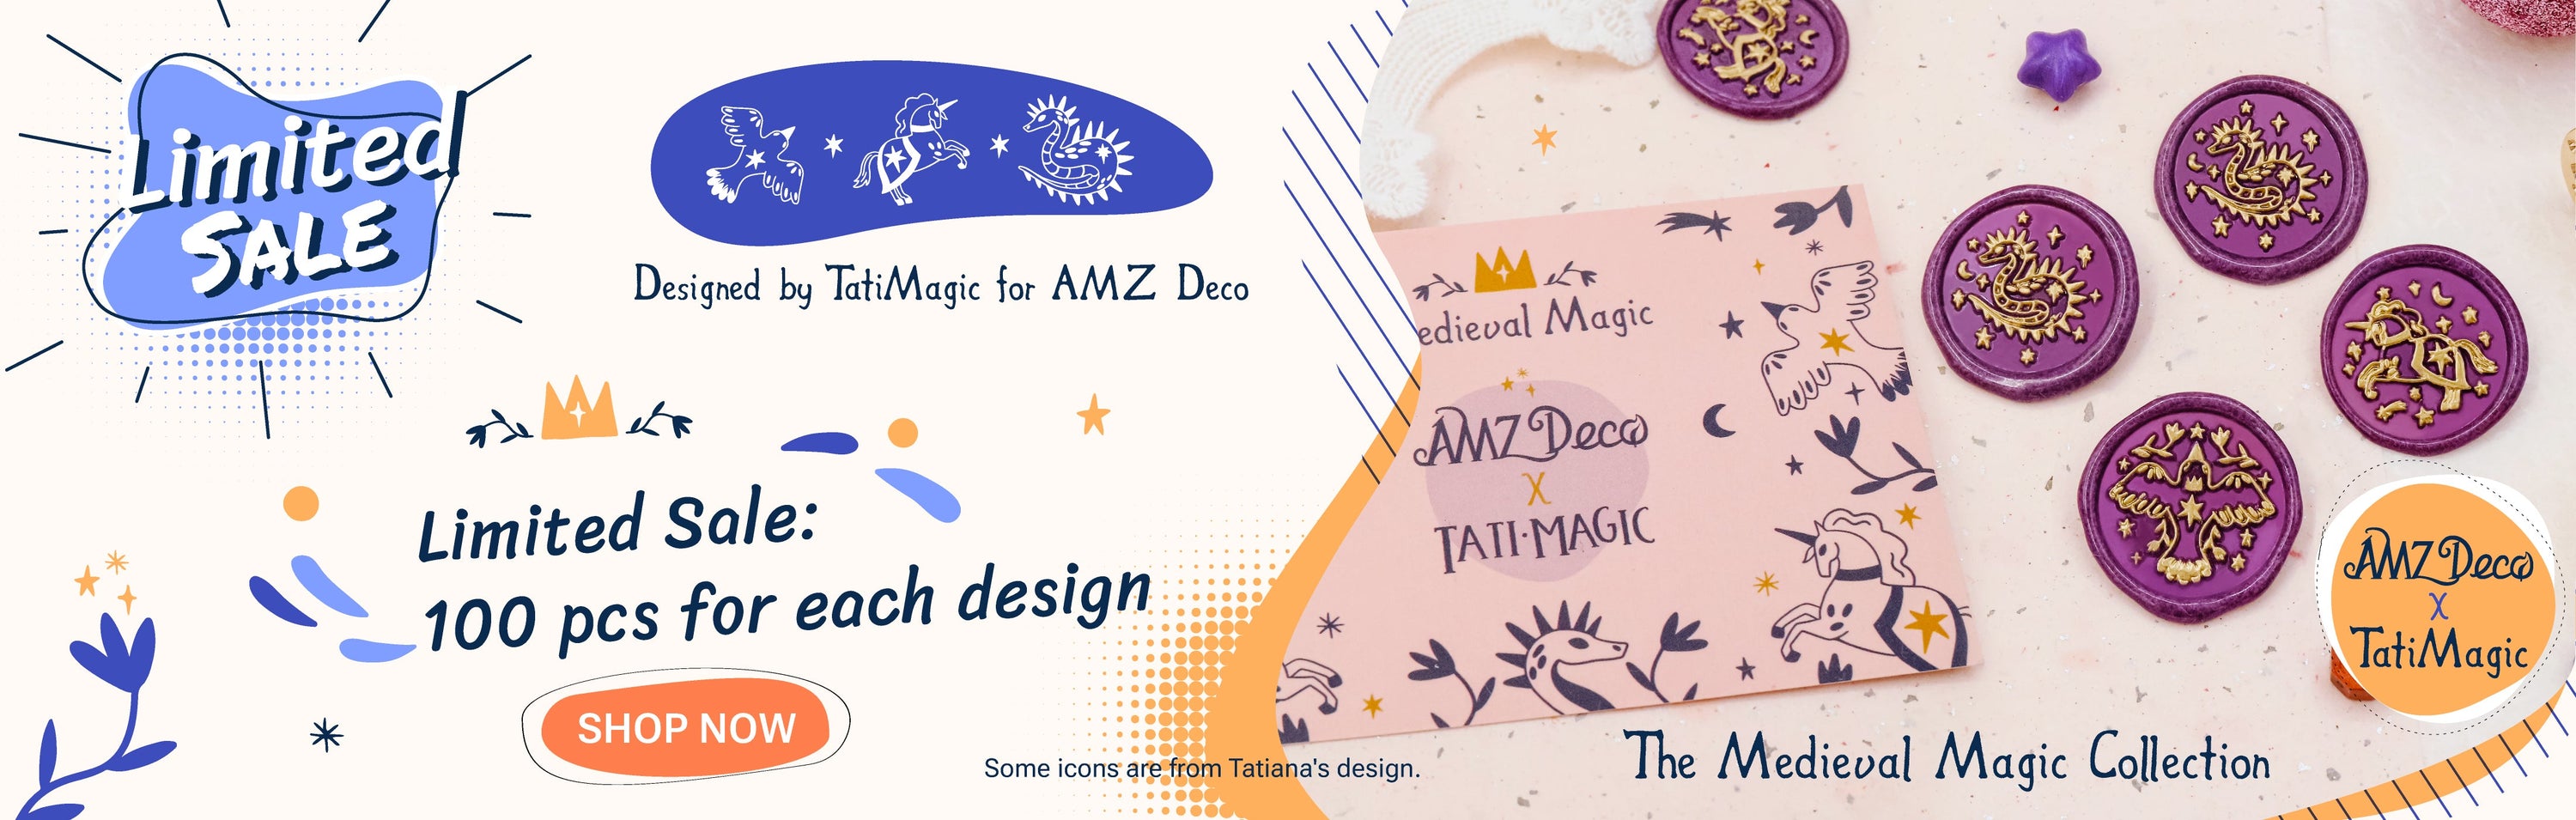 Tatimagic_X_AMZ_Deco_Medieval_Designs_Wax_Seal_Stamps